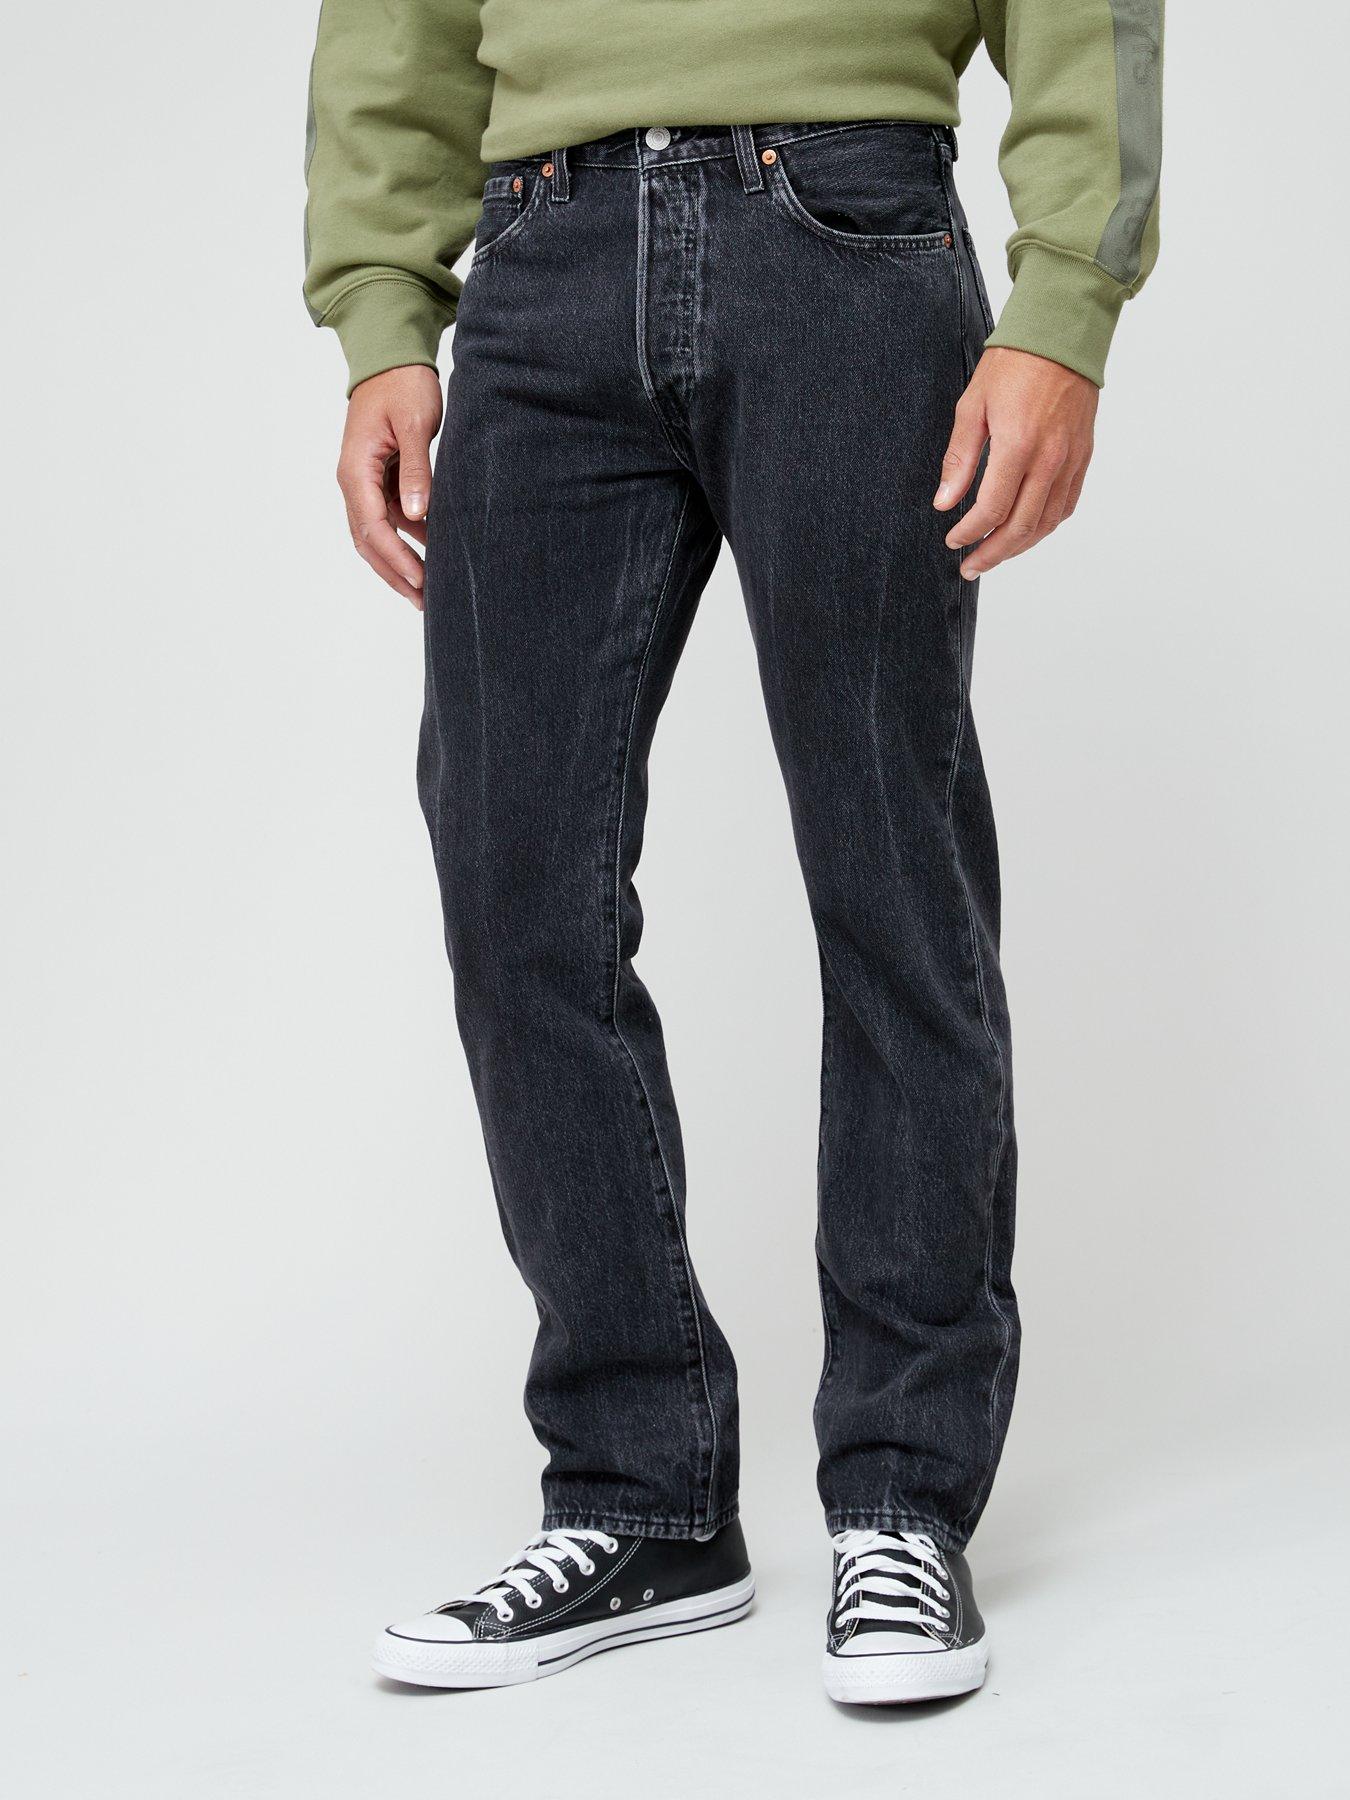 Levi's Jeans | Men's Clothing | Straight & Slim Fit | Very Ireland